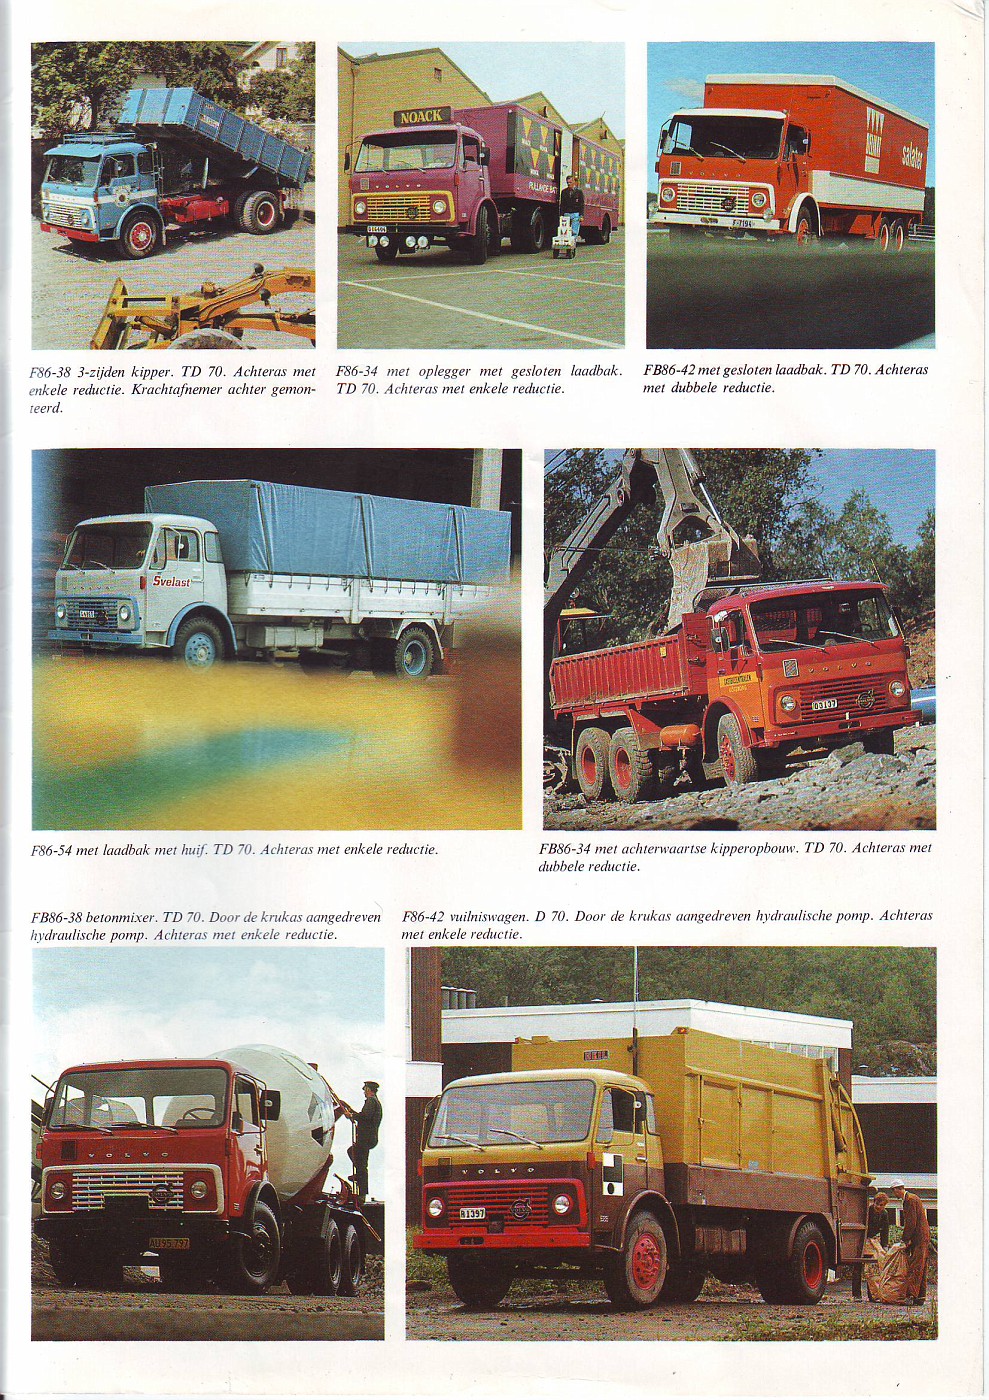 Volvo F86 1972 album | Dutch Model Truck Club | Fotki.com, photo and ...